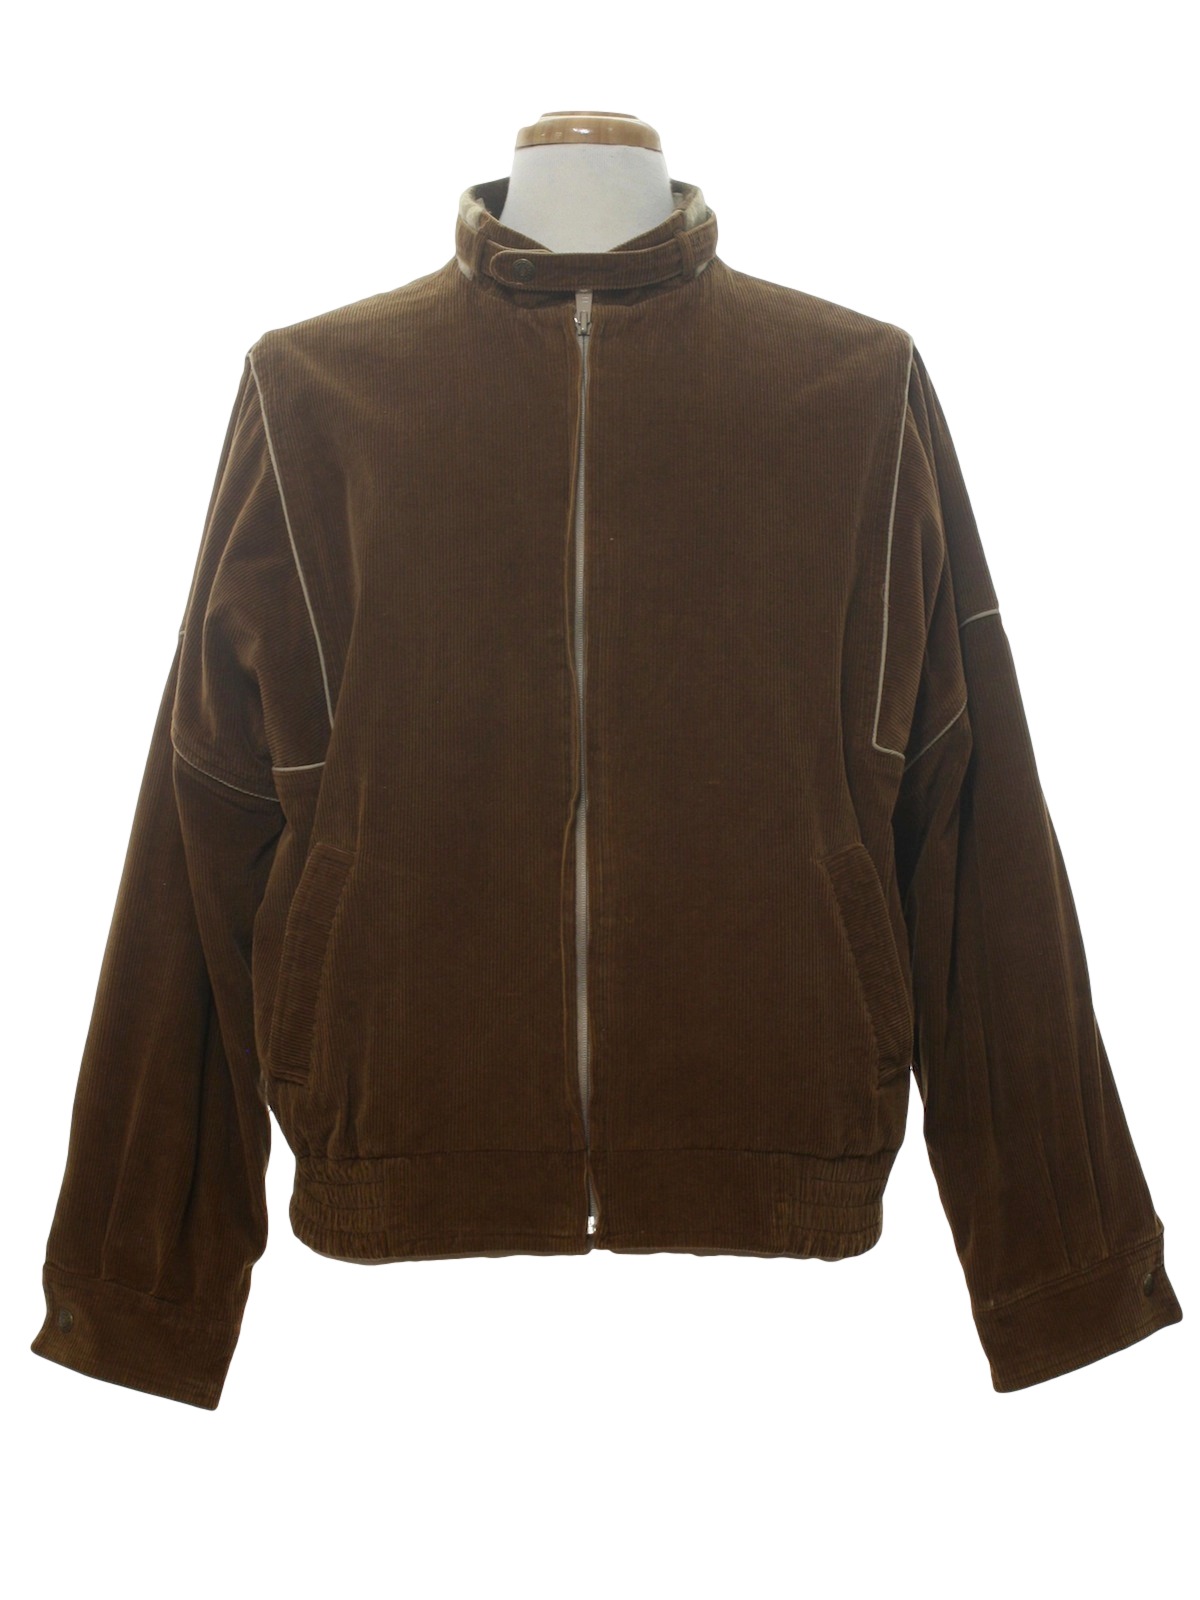 Retro 1980's Jacket (Current Seen) : 80s -Current Seen- Mens brown ...